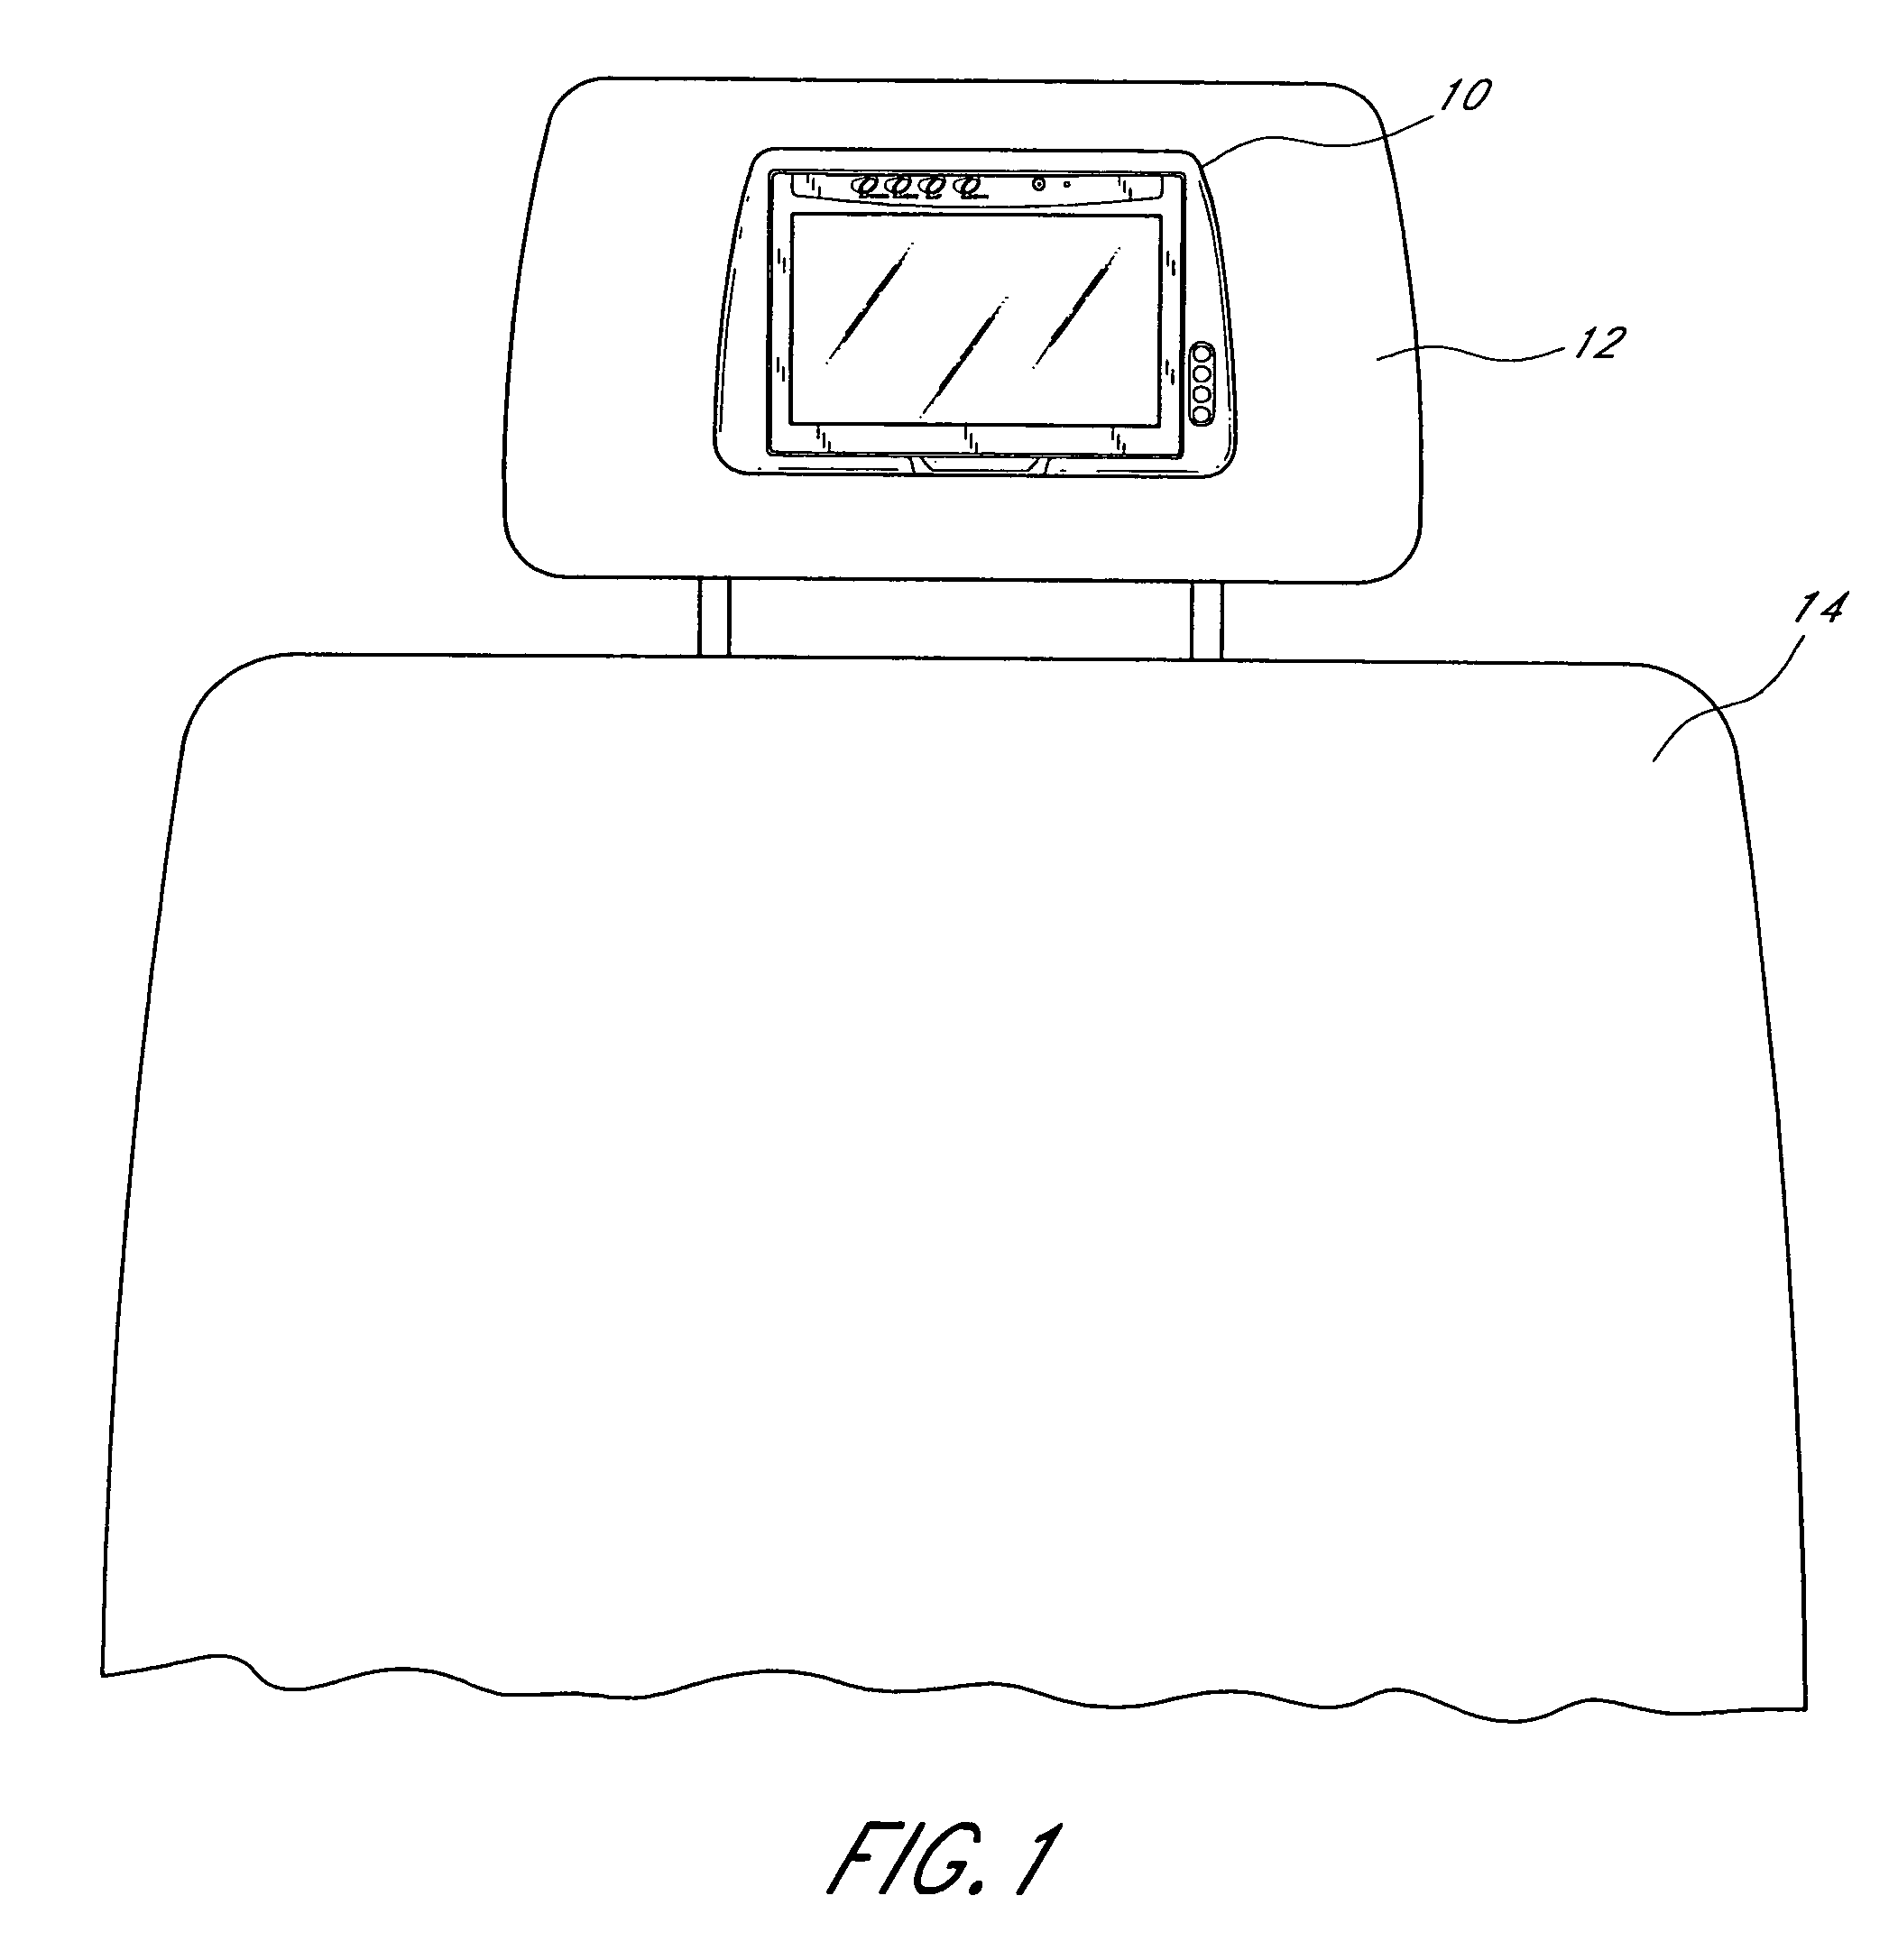 Headrest-mounted monitor